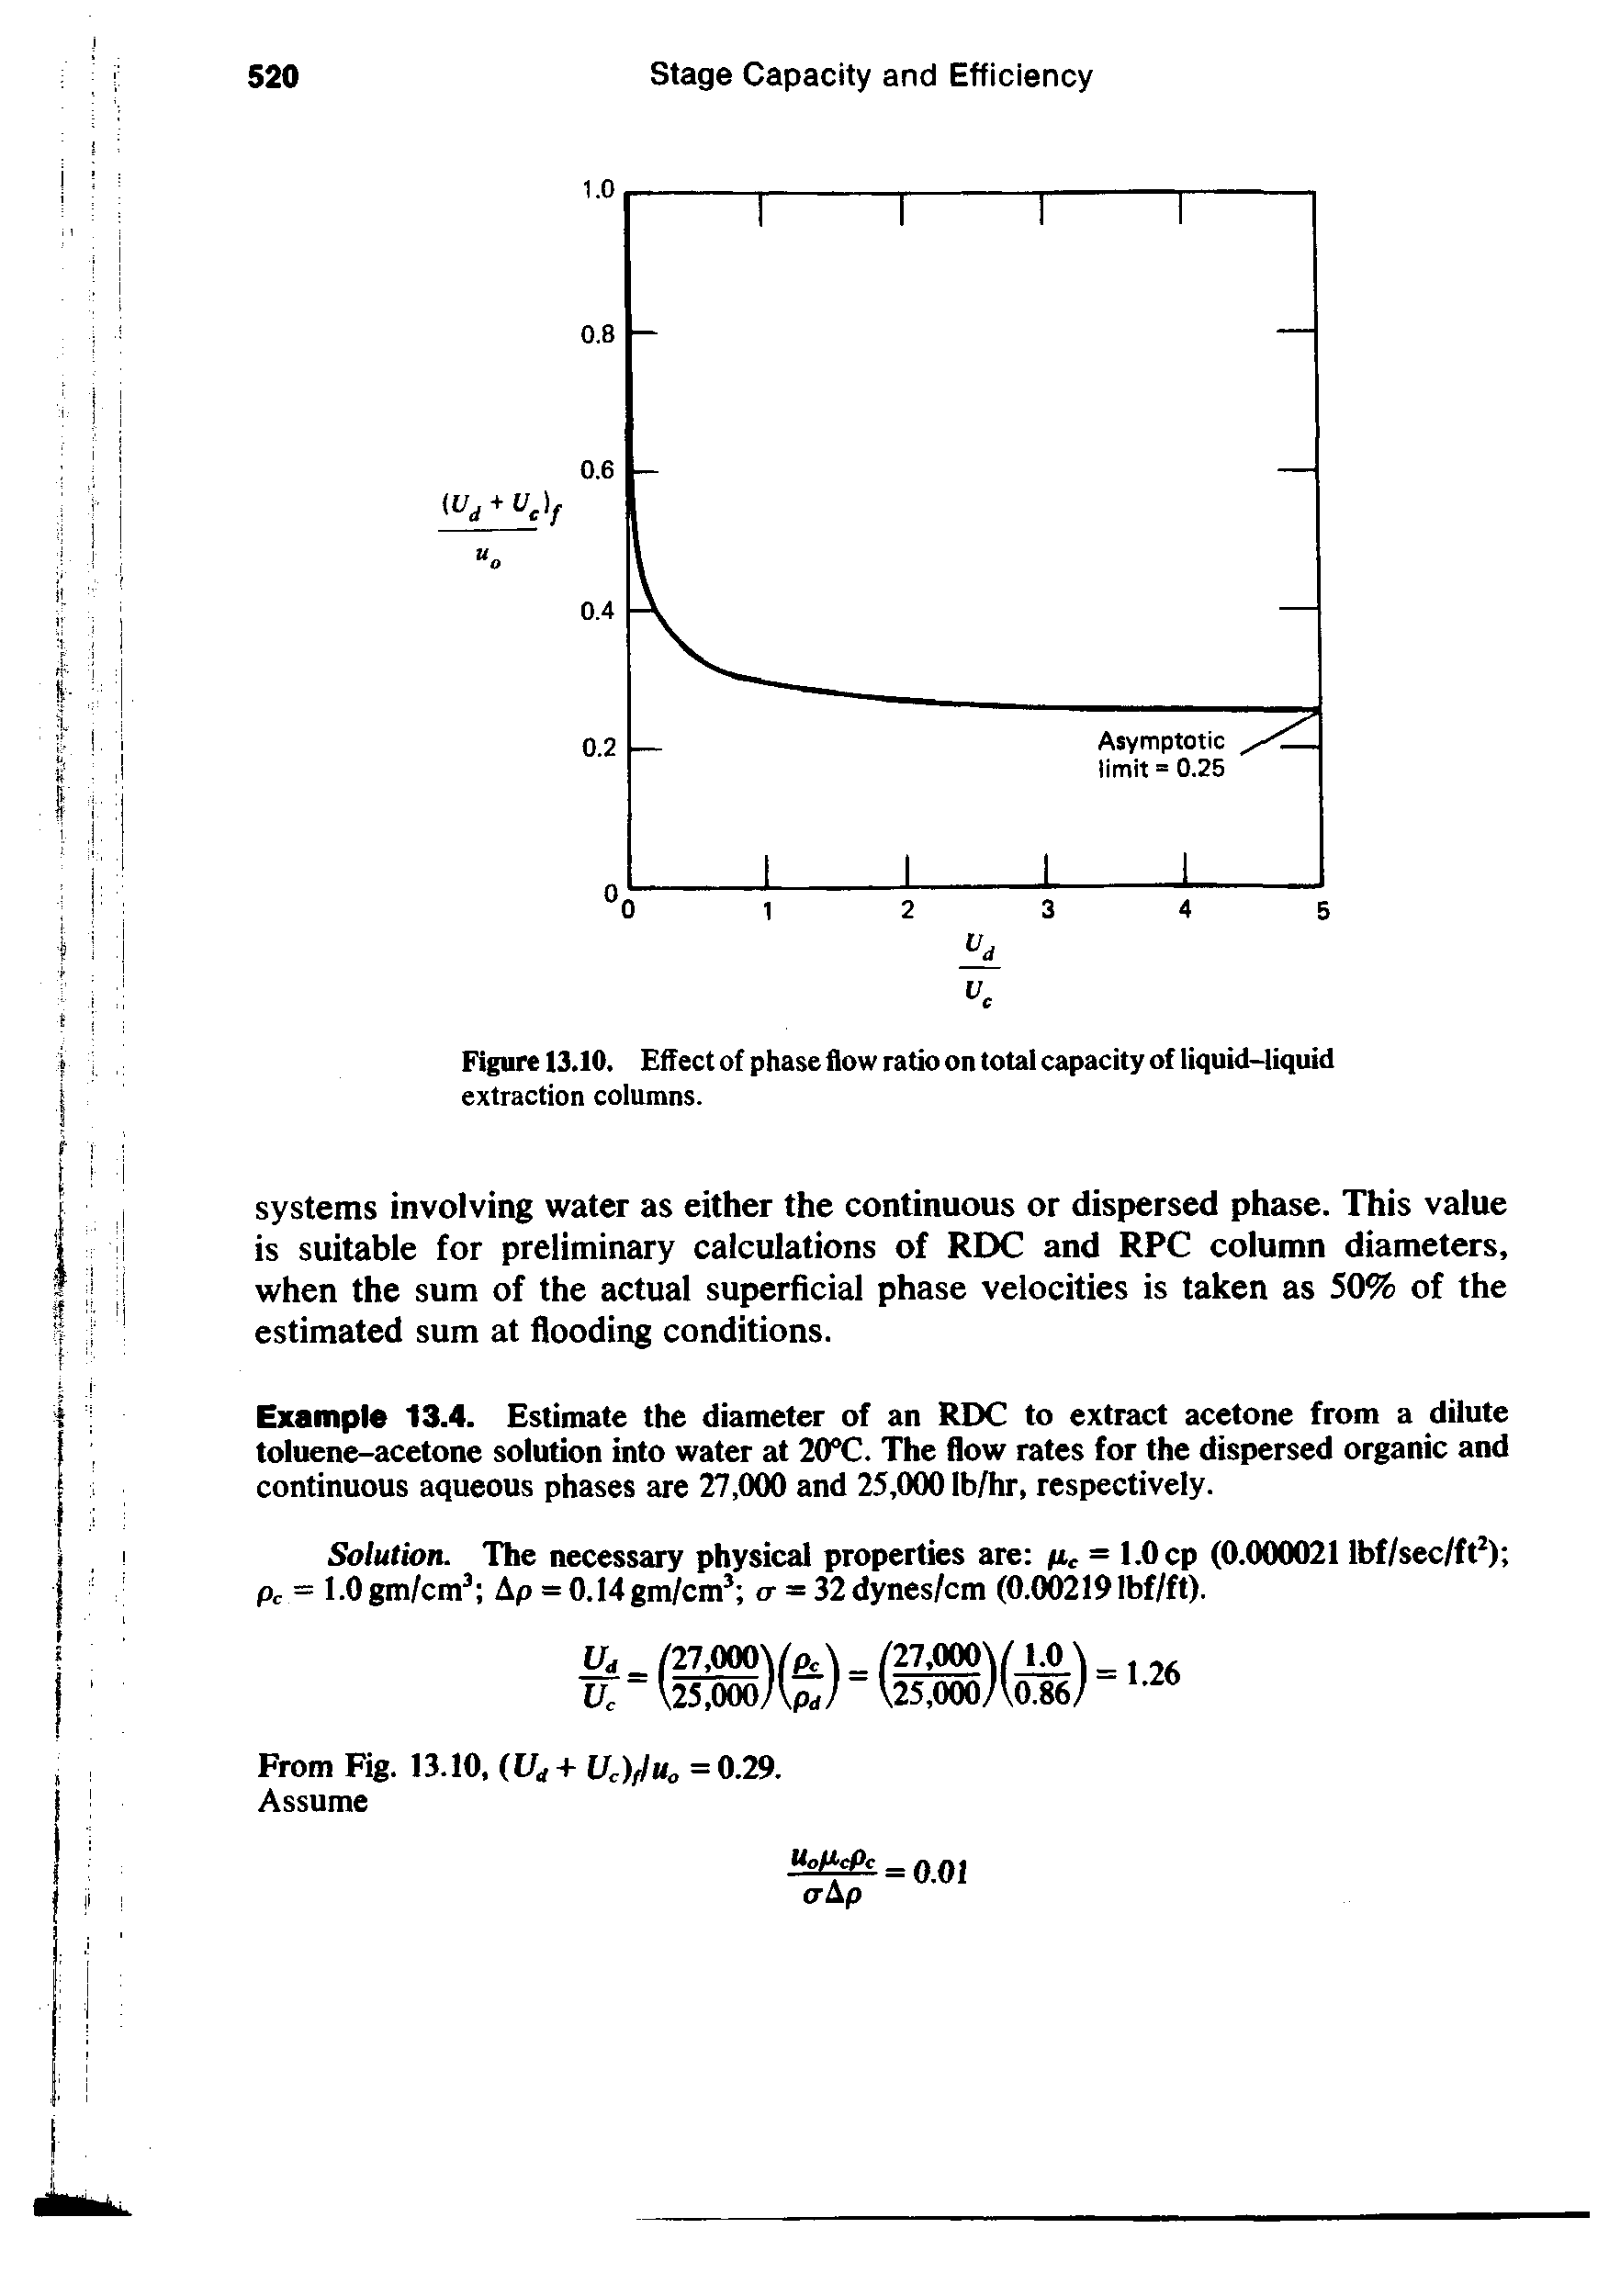 Figure 13.10. Effect of phase flow ratio on total capacity of liquid-liquid extraction columns.